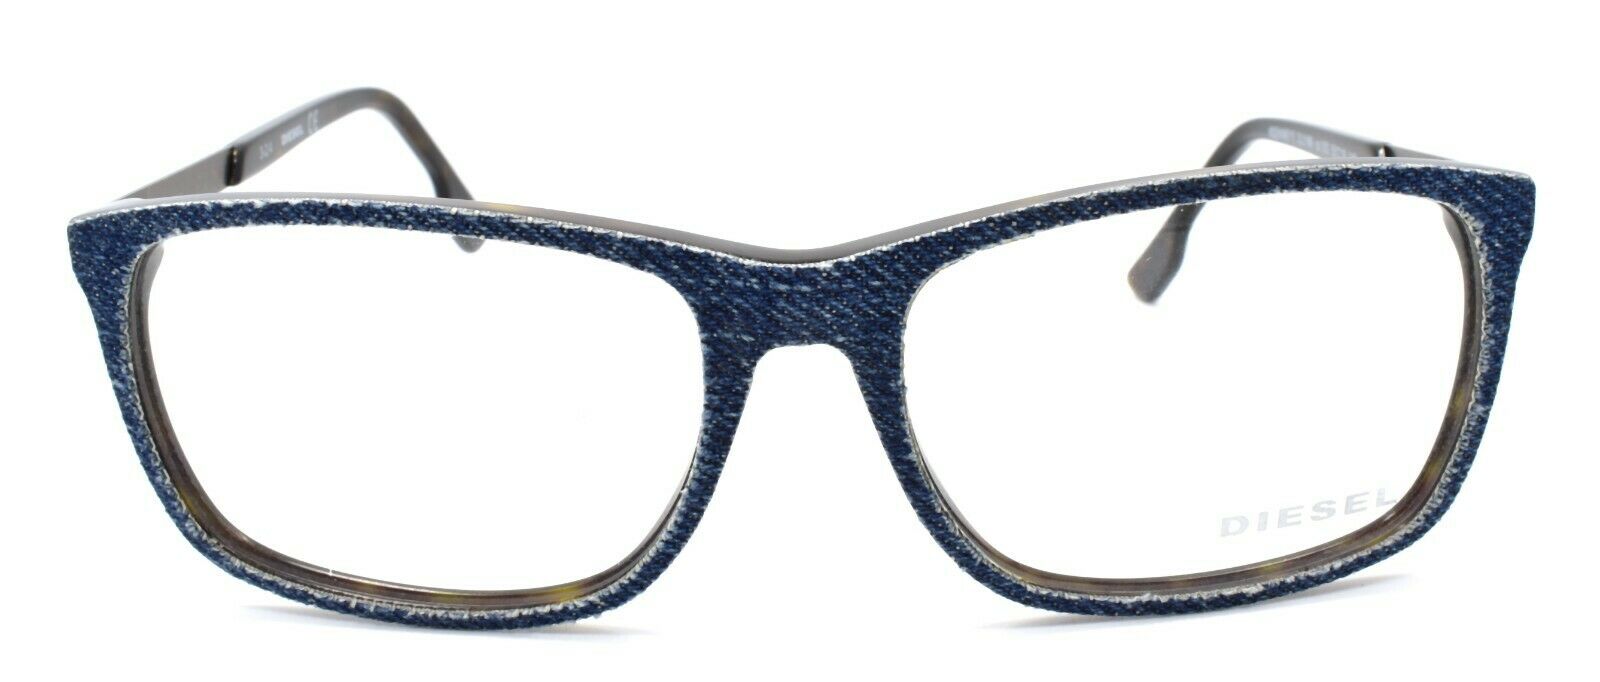 2-Diesel DL5166 052 Men's Eyeglasses Frames 55-16-145 Dark Havana / Blue Denim-664689683680-IKSpecs